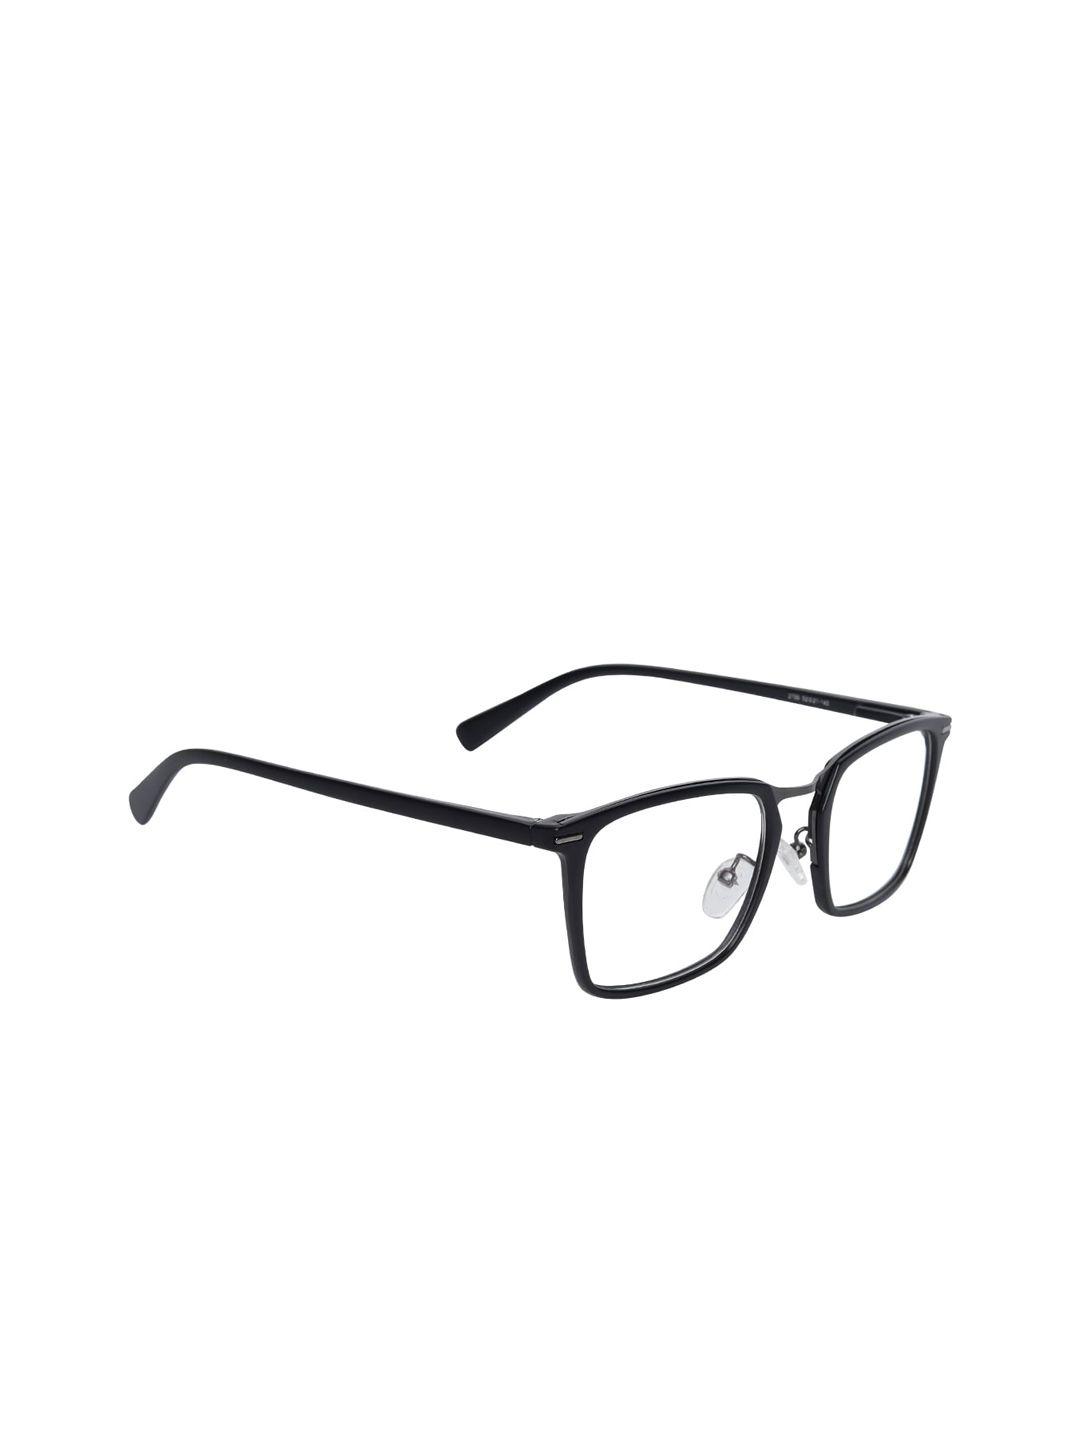 peter jones eyewear unisex black solid anti glare lens full rim optical square frames 2755b